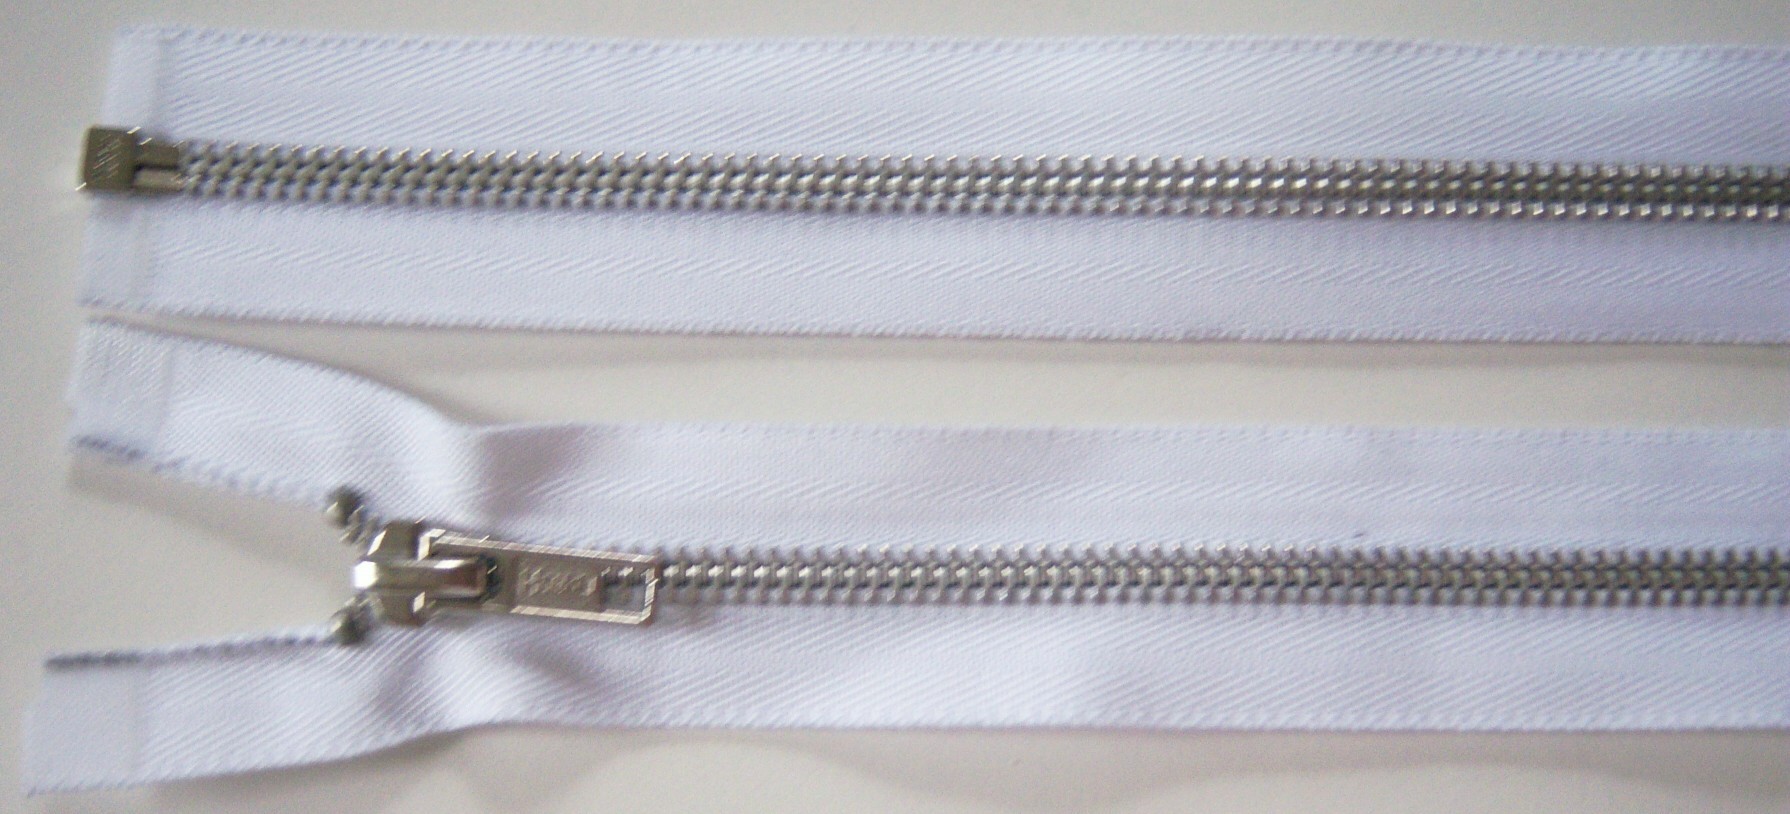 White Ideal 28.5" Metal Separating Zipper